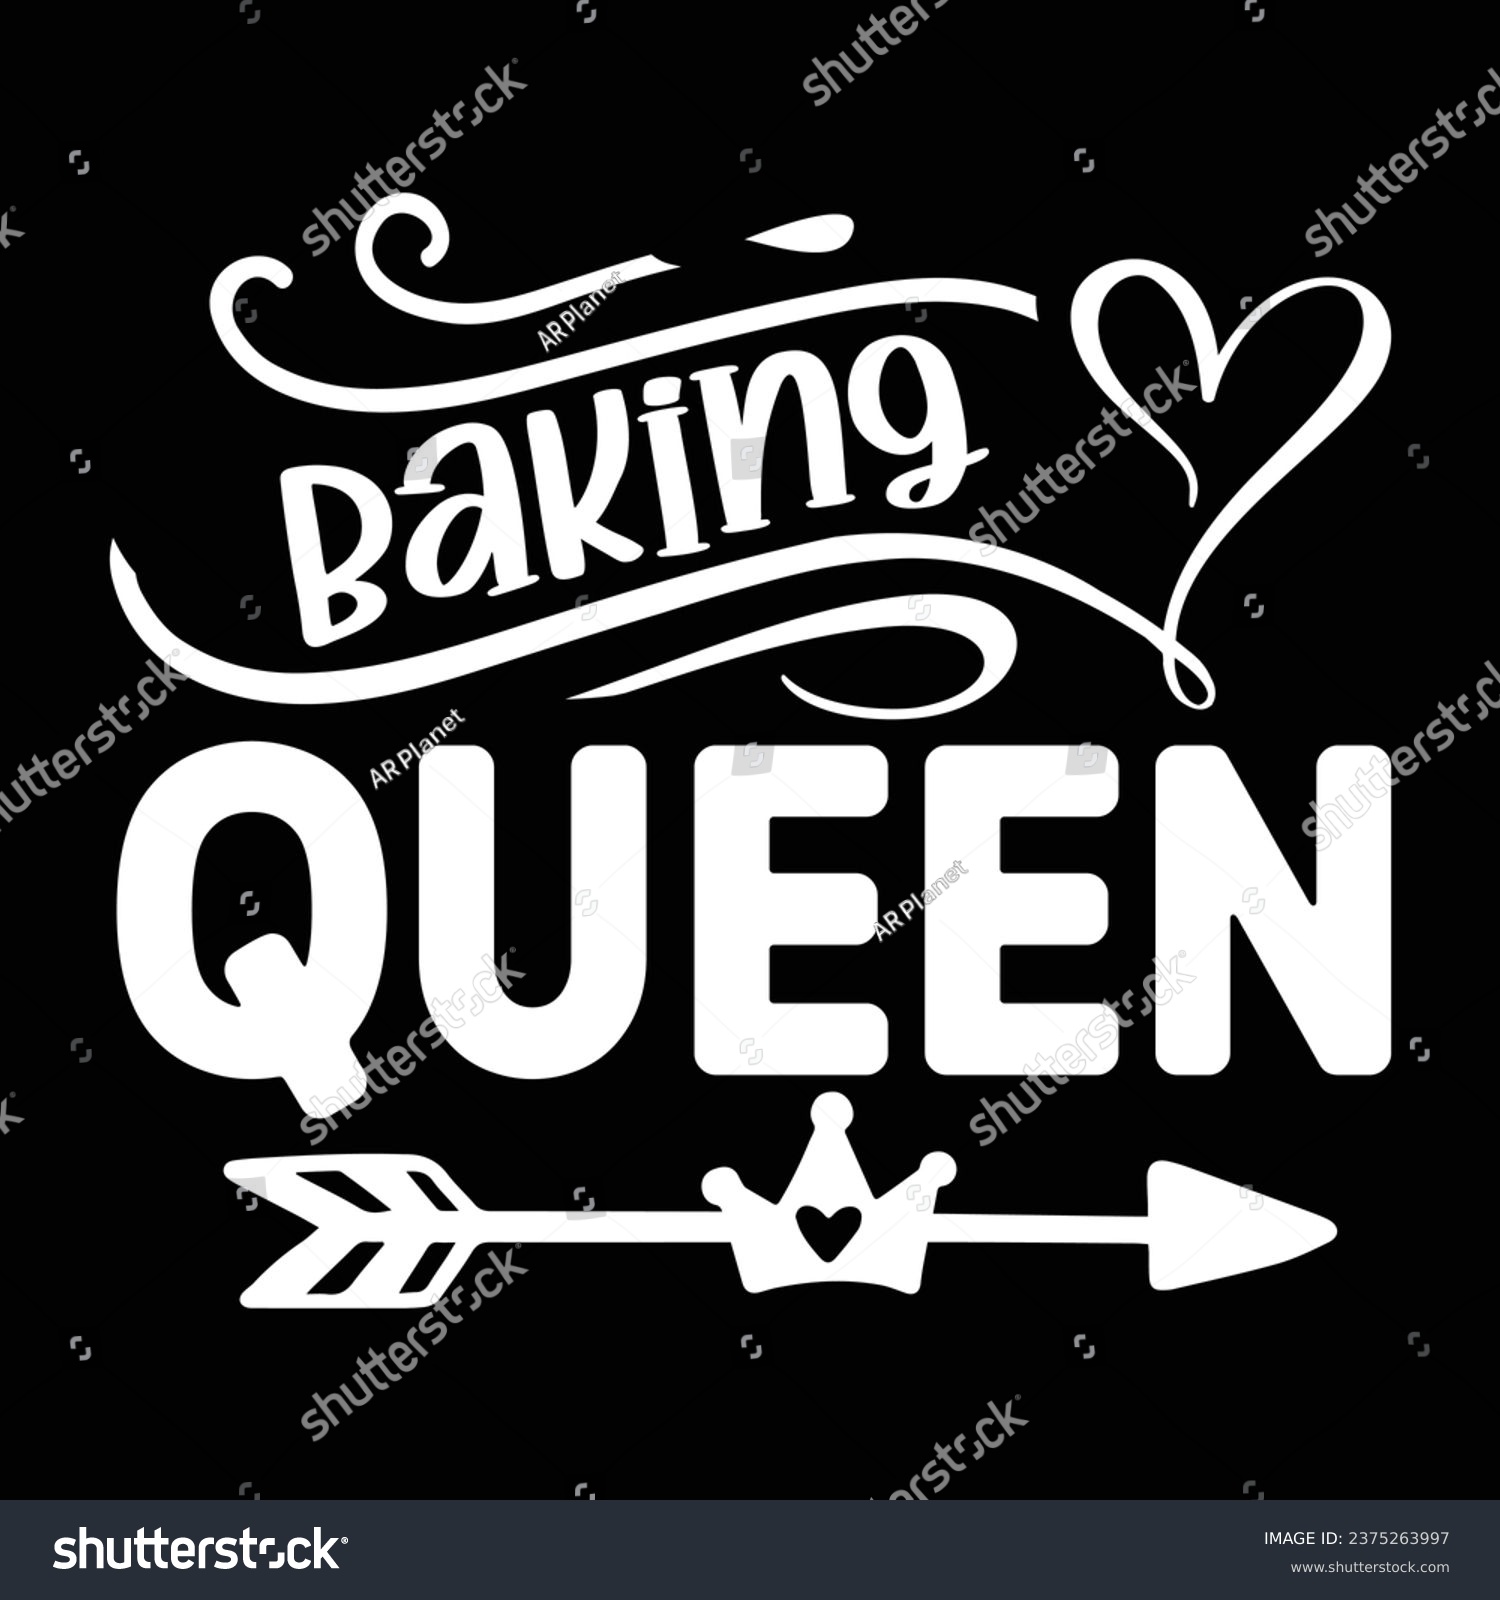 SVG of Baking queen - Apron design svg